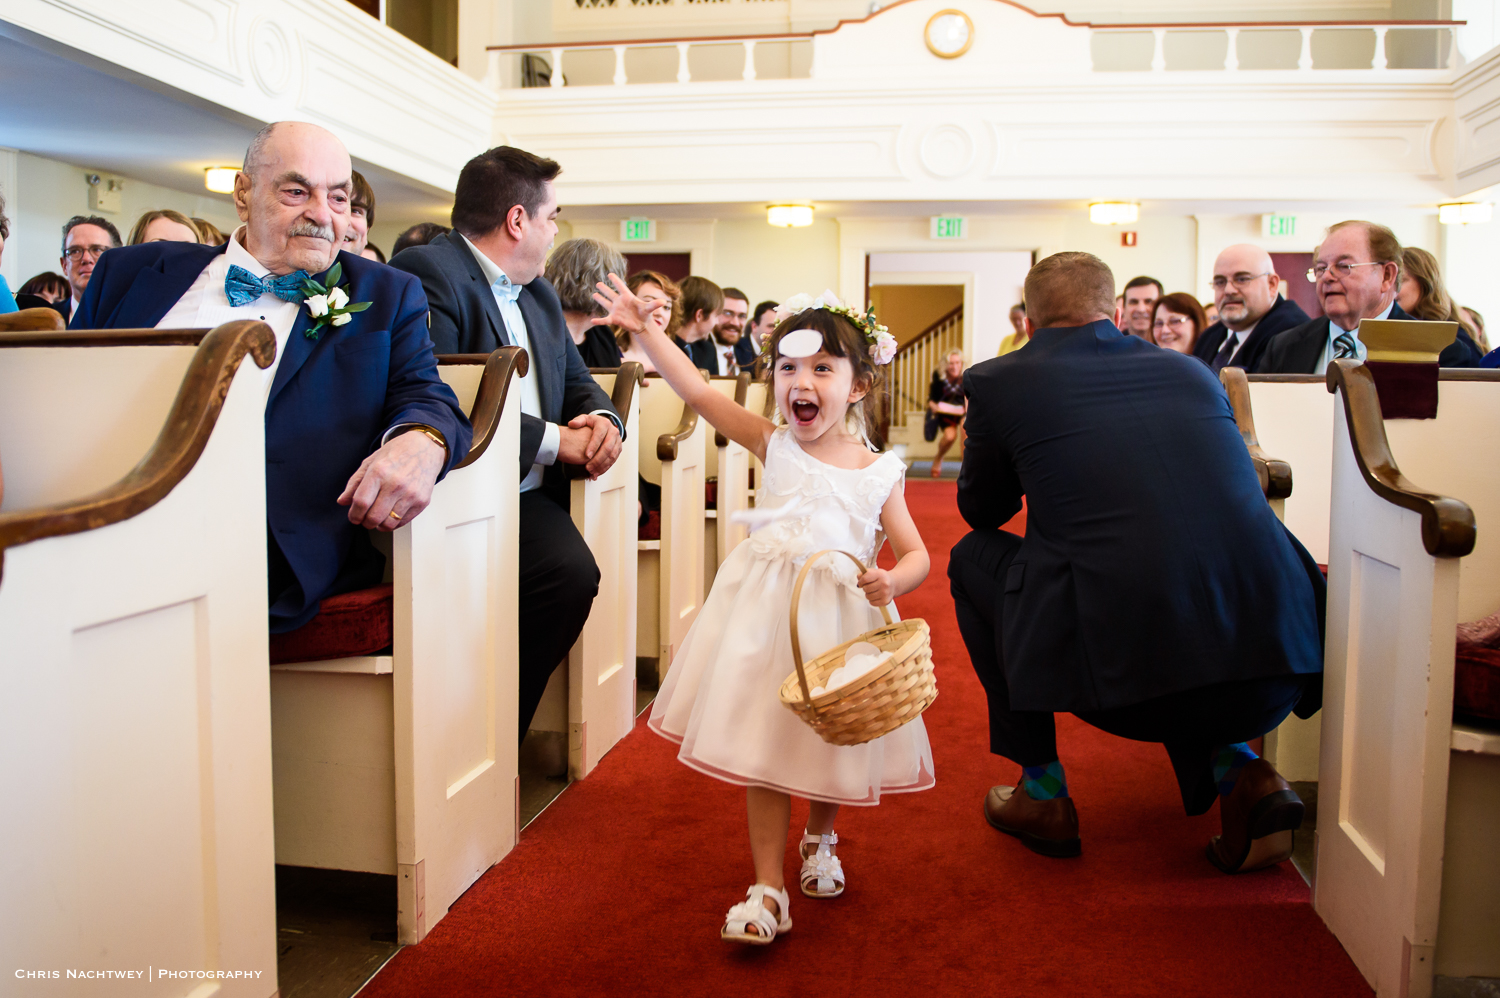 wedding-photos-united-states-coast-guard-academy-chris-nachtwey-photography-2019-9.jpg